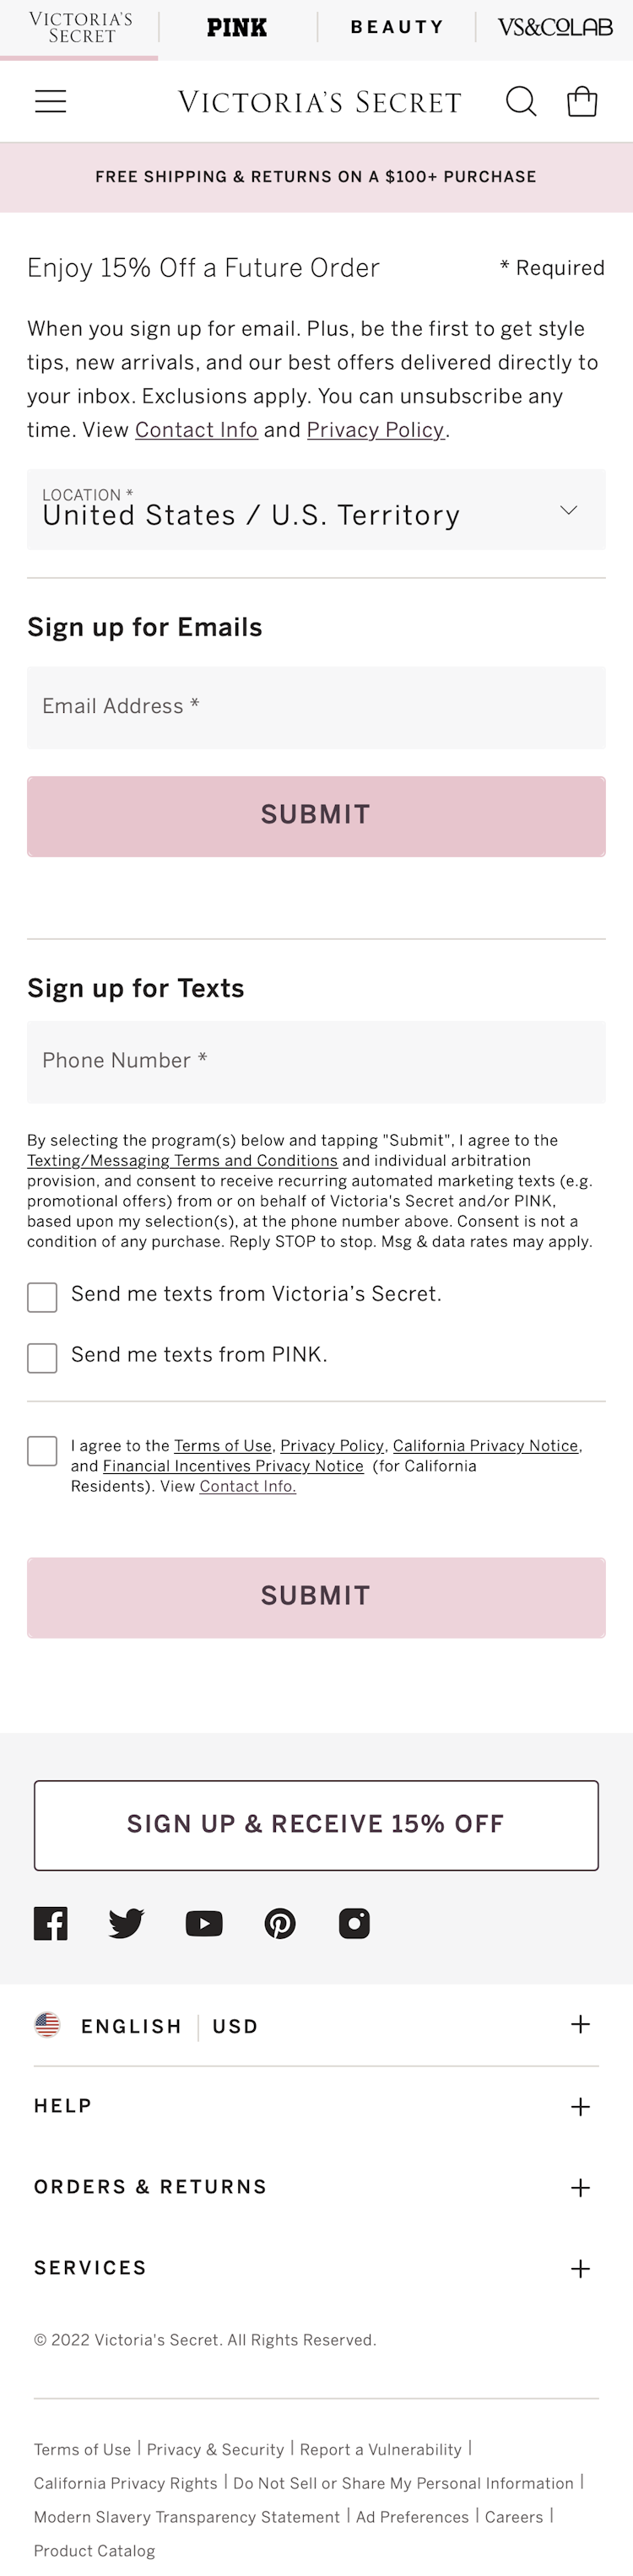 Victoria's Secret's Newsletter Management – 202 of 287 Newsletter